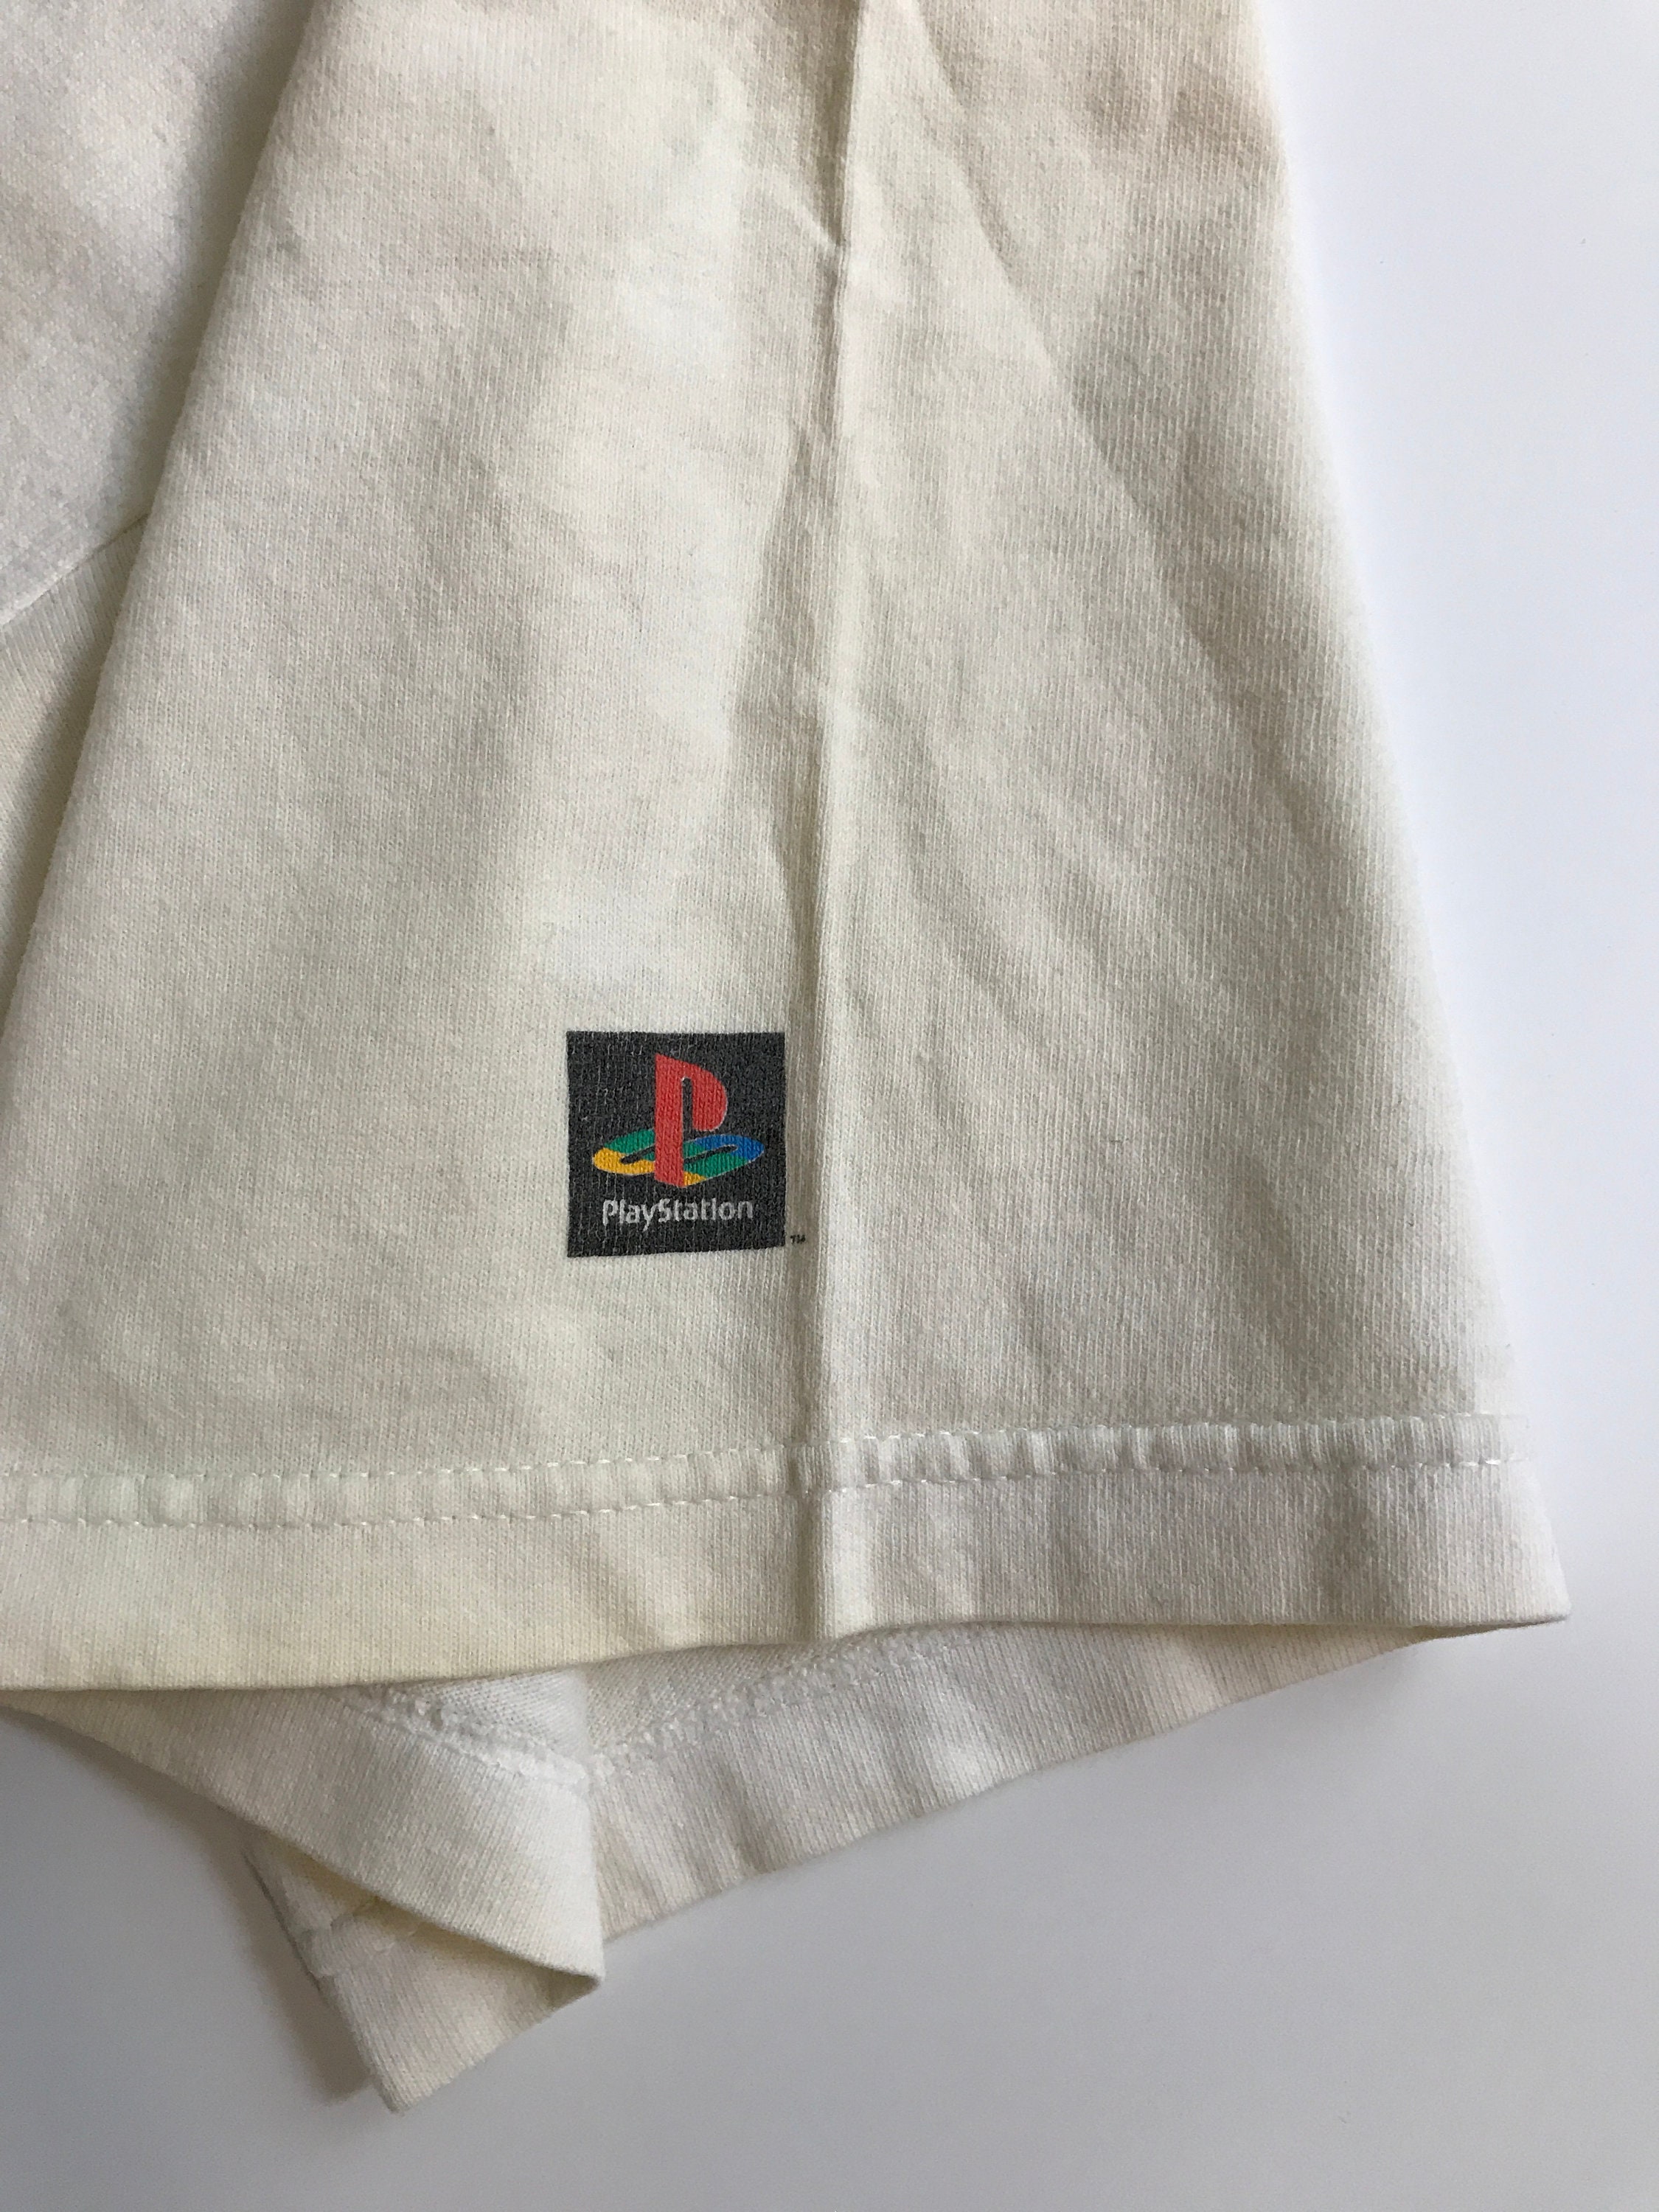 Vintage 90s Final Fantasy VIII T-shirt Rare Video Game Japan 